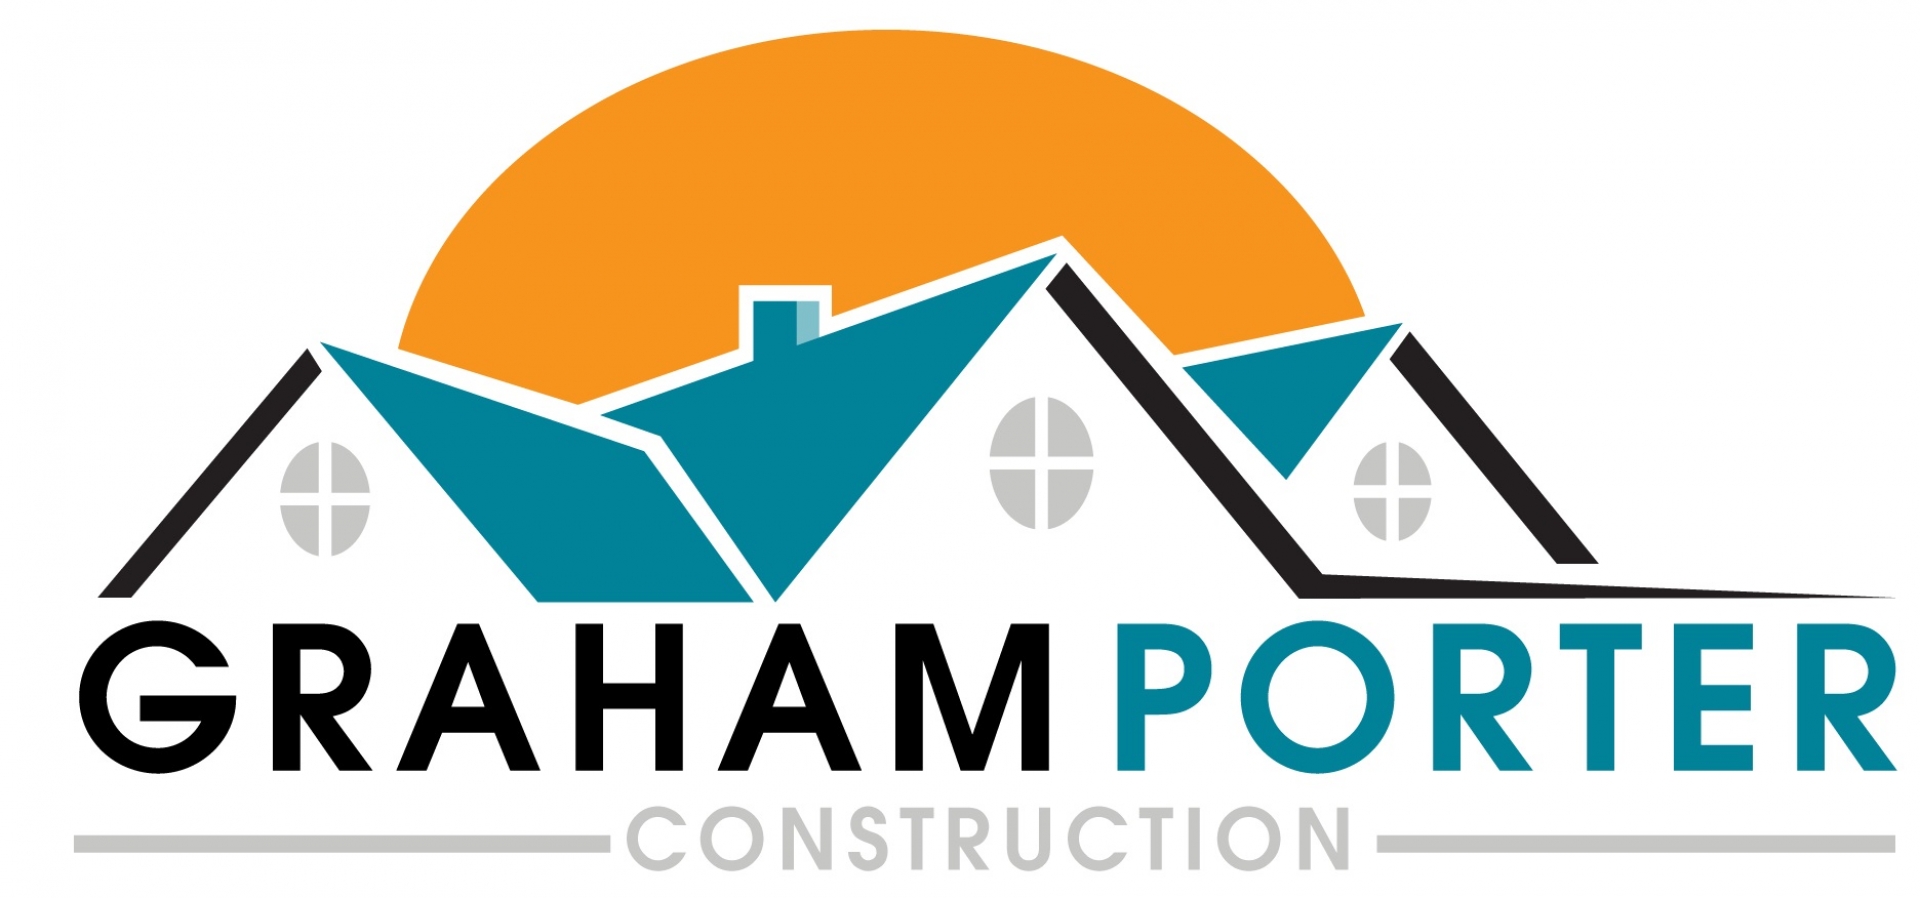 Graham Porter Construction, Inc. company logo